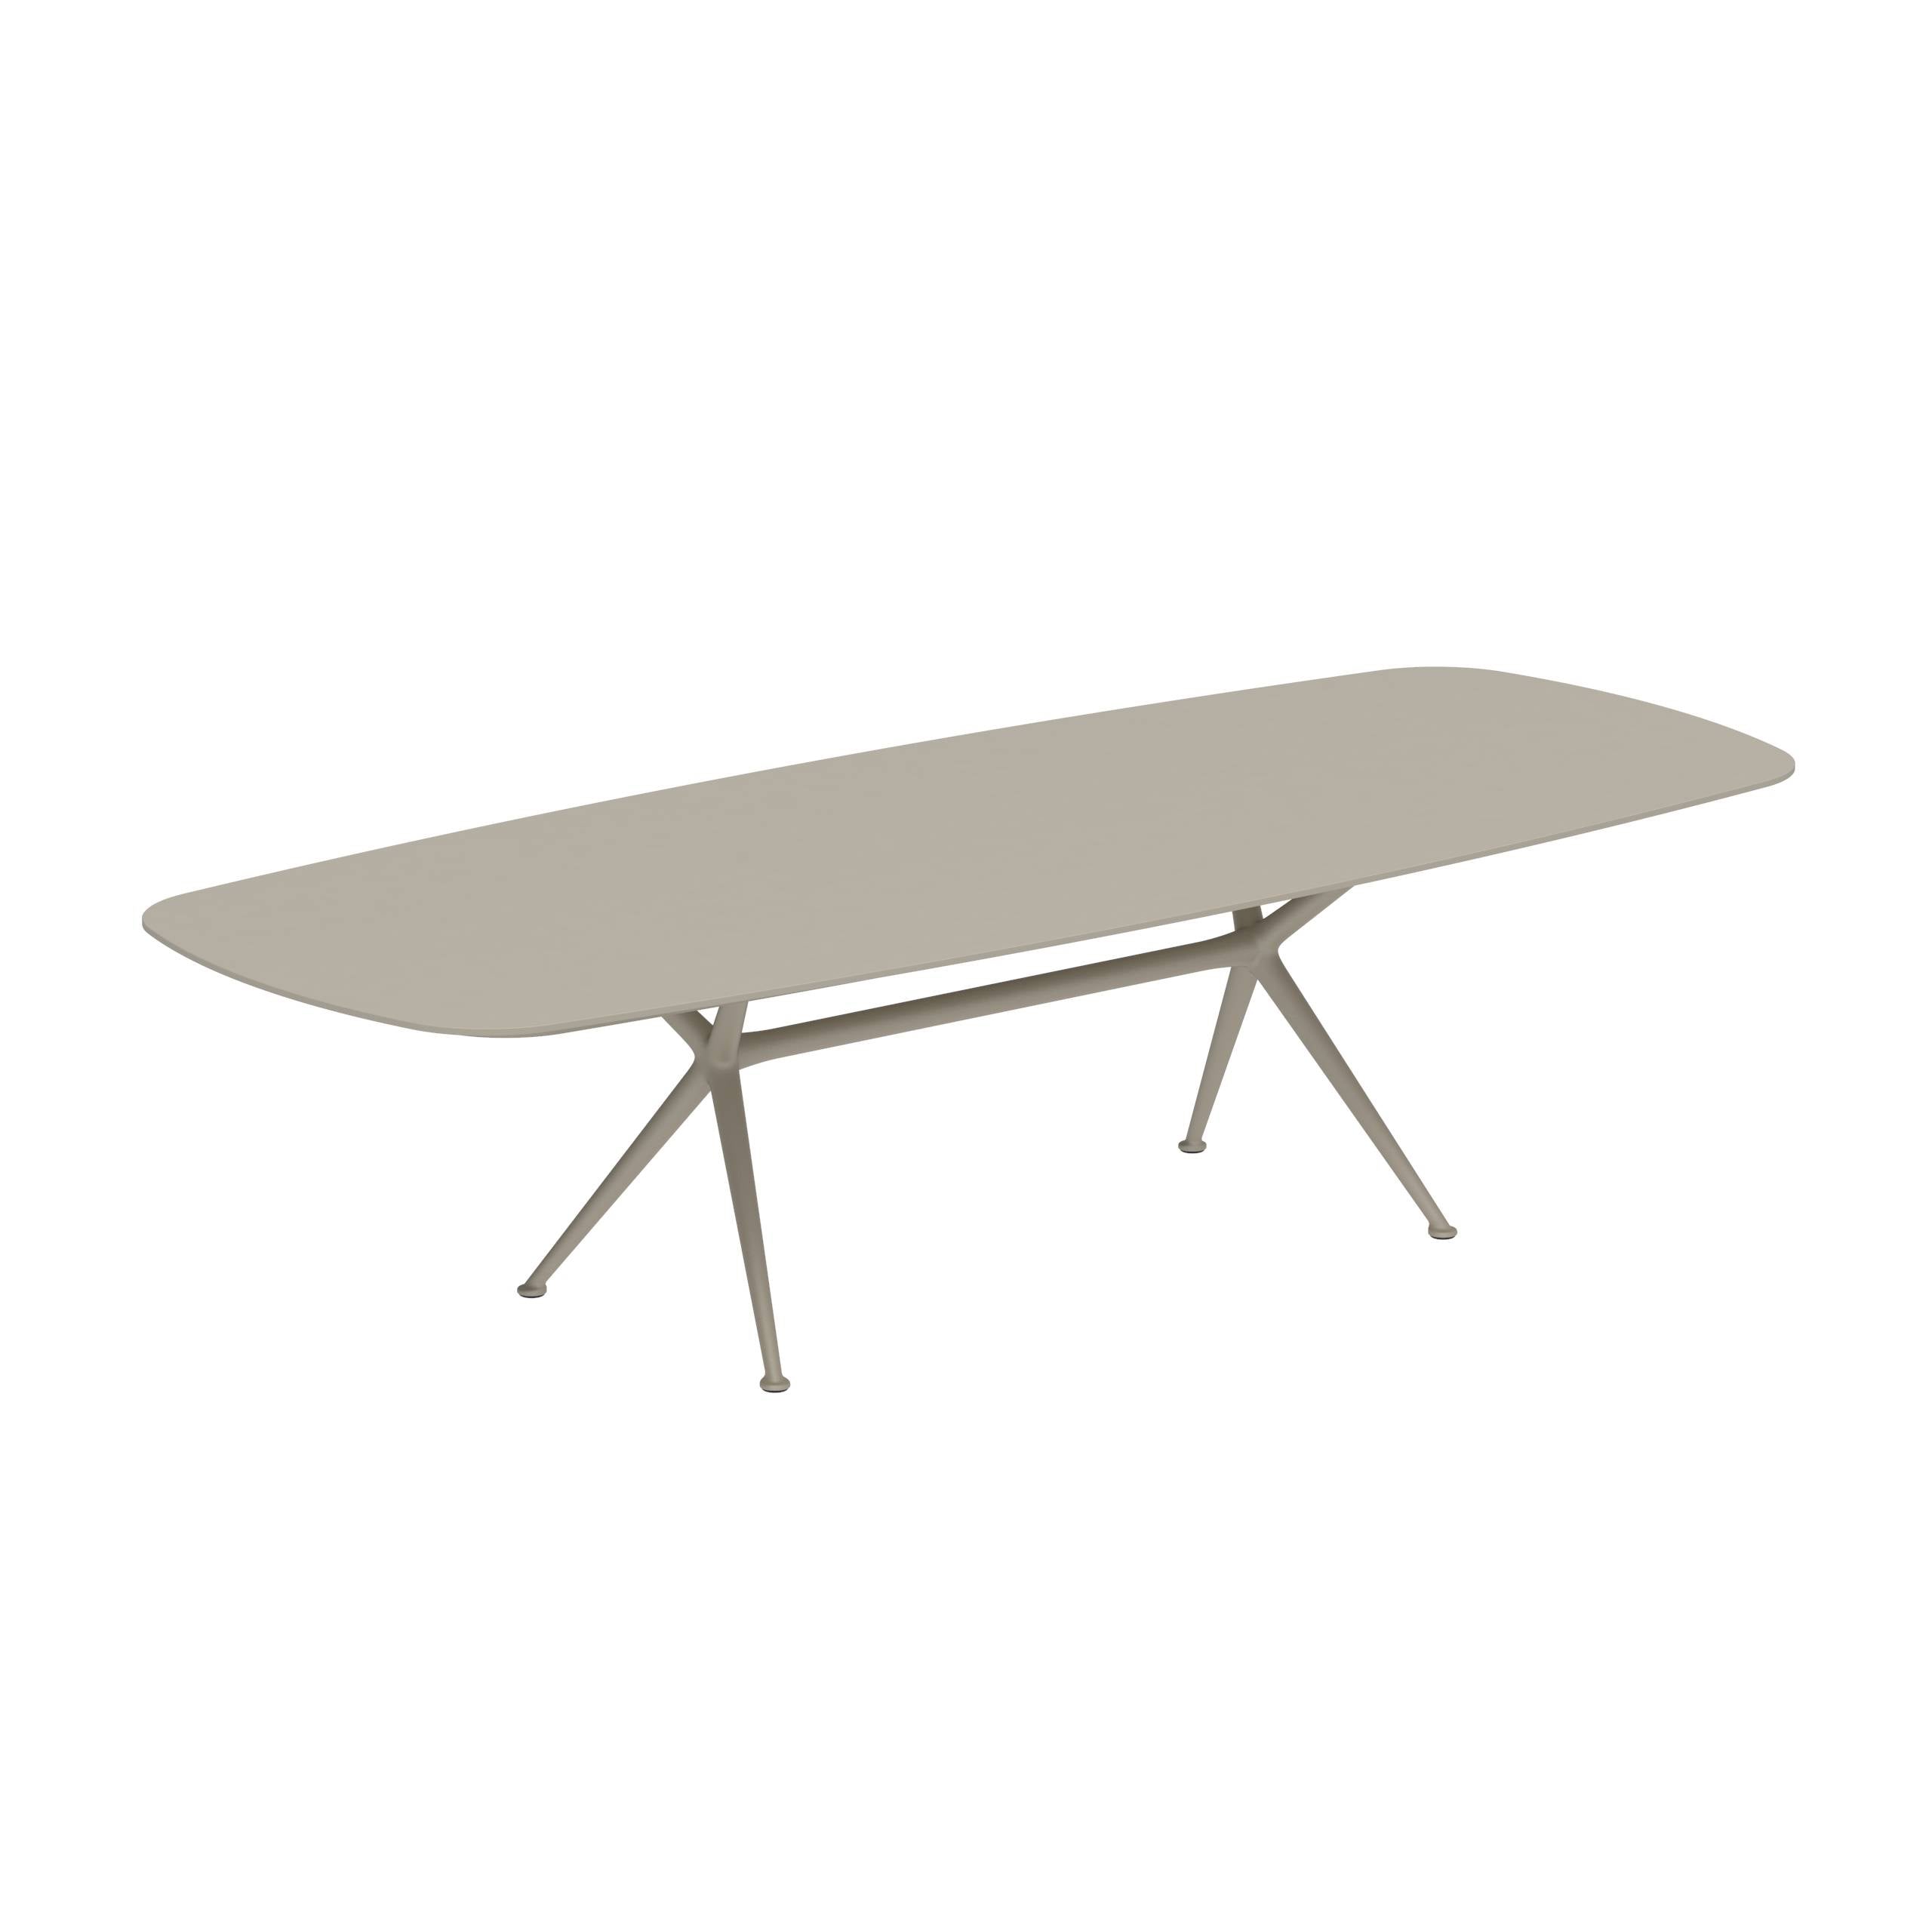 Exes Table 300x120cm Alu Legs Sand - Table Top Ceramic Pearl Grey